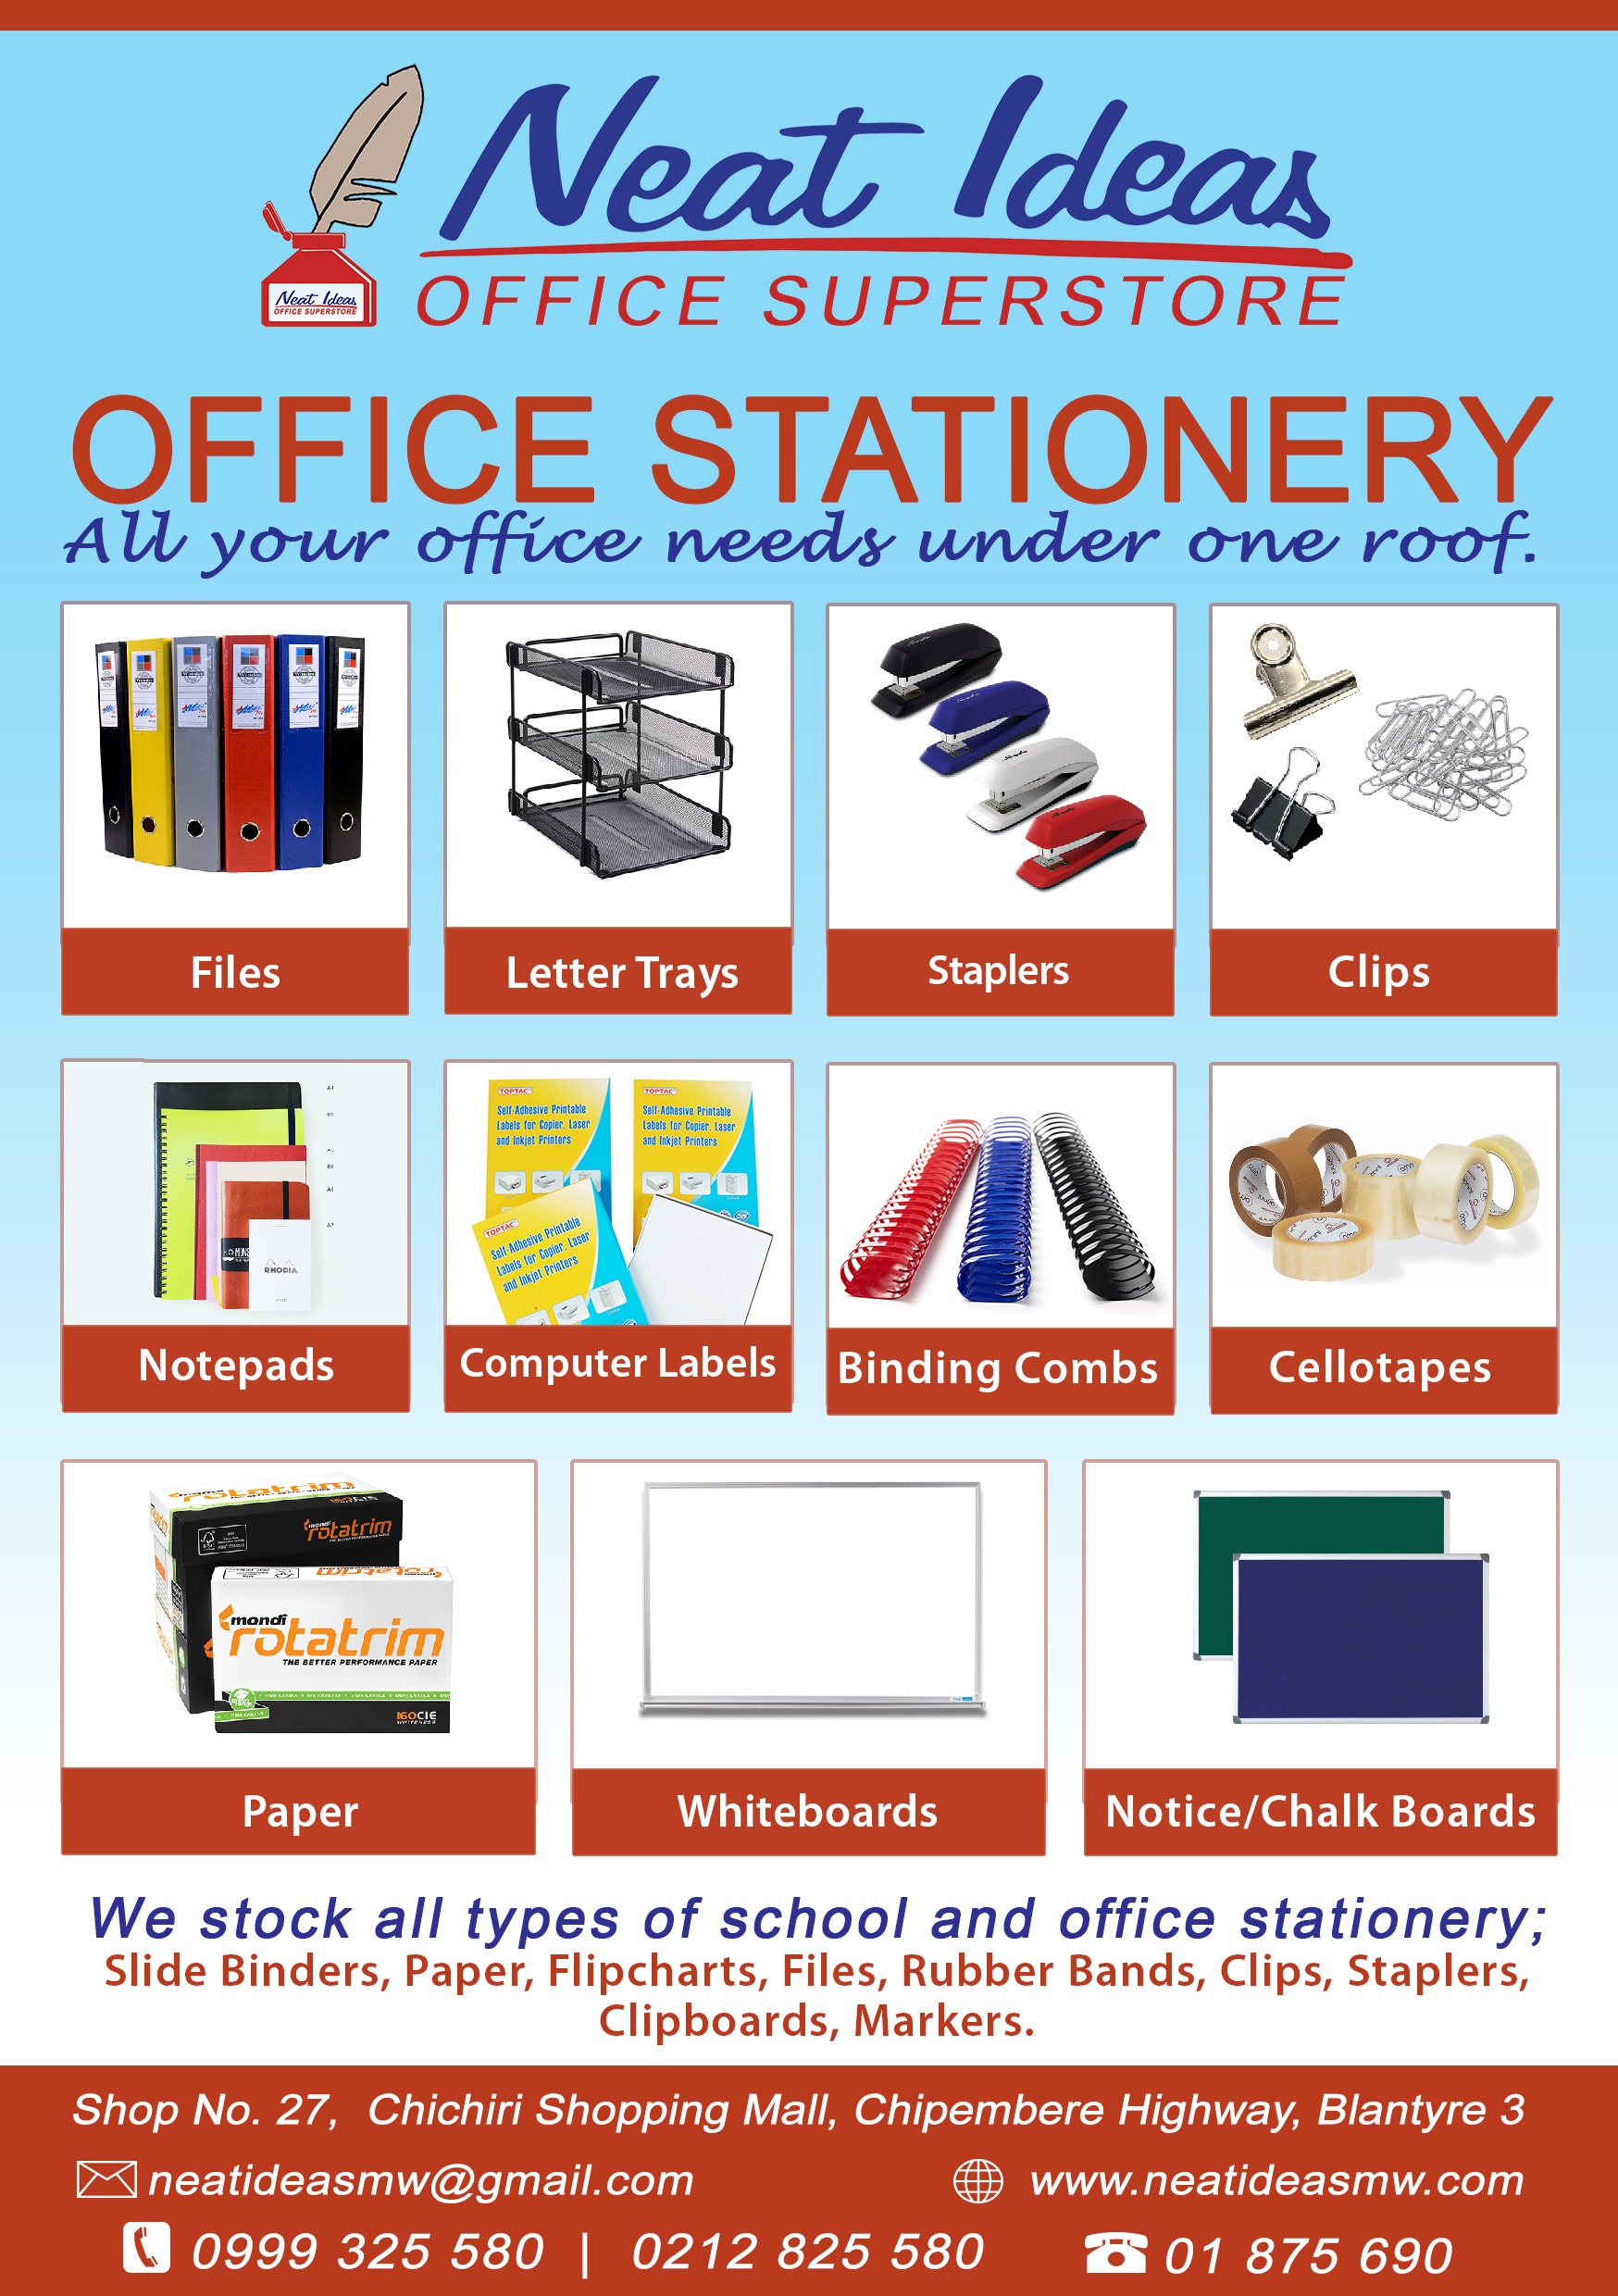 Office Stationery